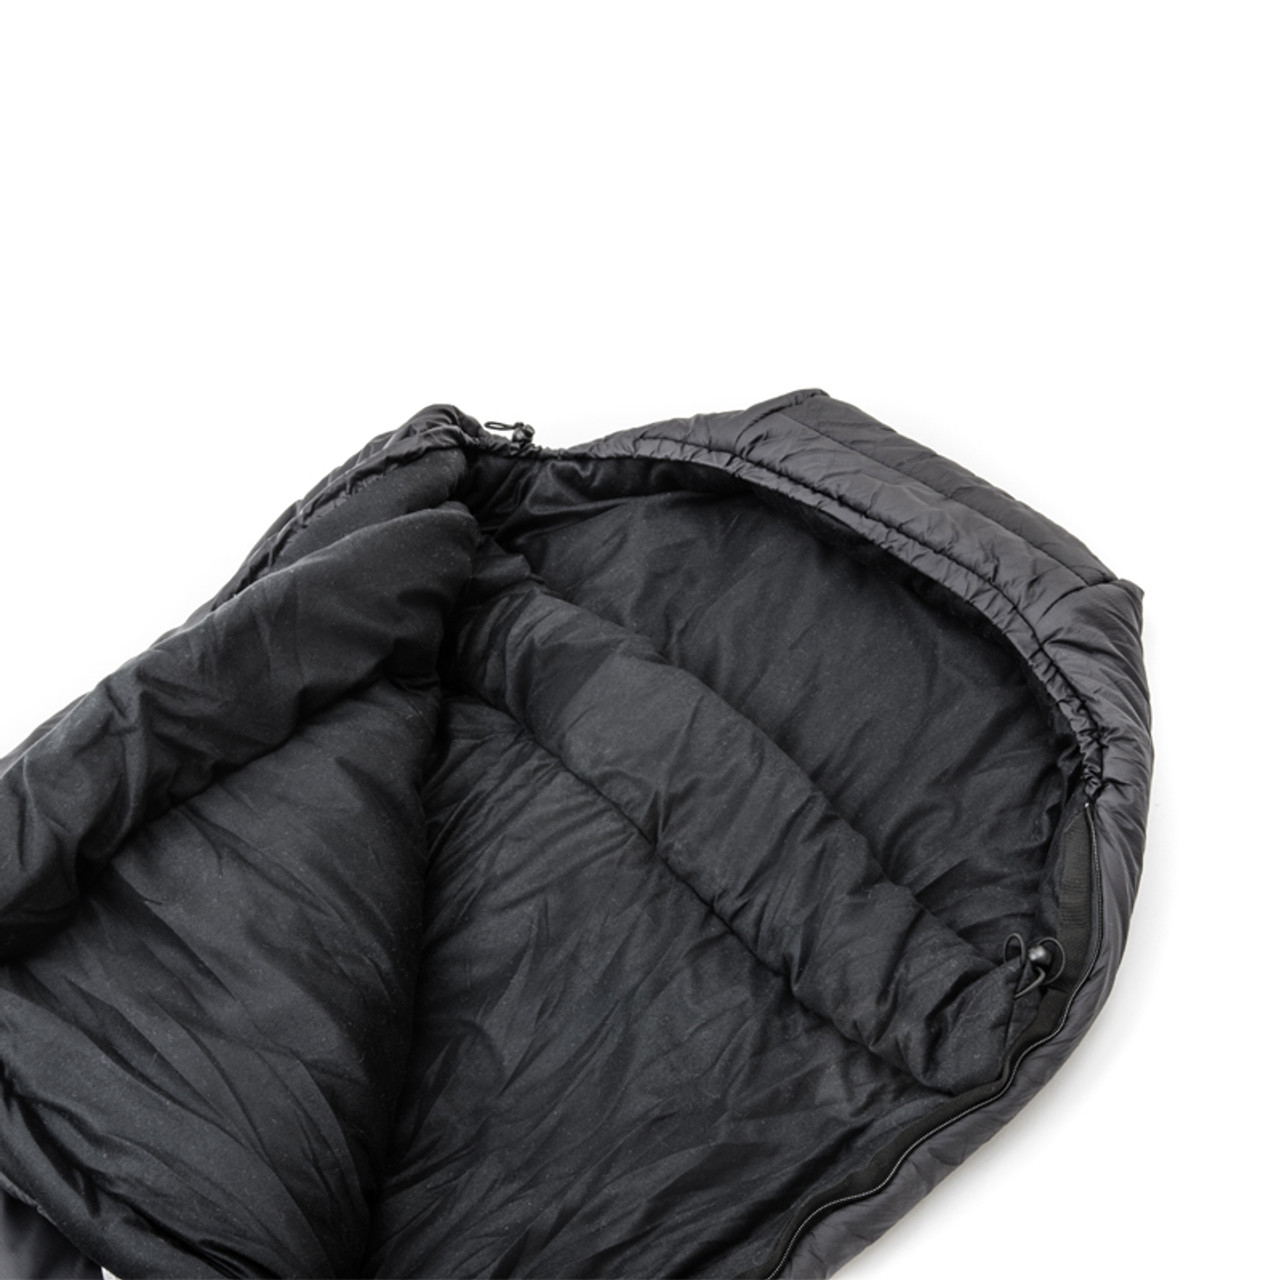 Snugpak Softie Tactical 4 Sleeping Bag Extreme Winter Sleeping Bag UK Made